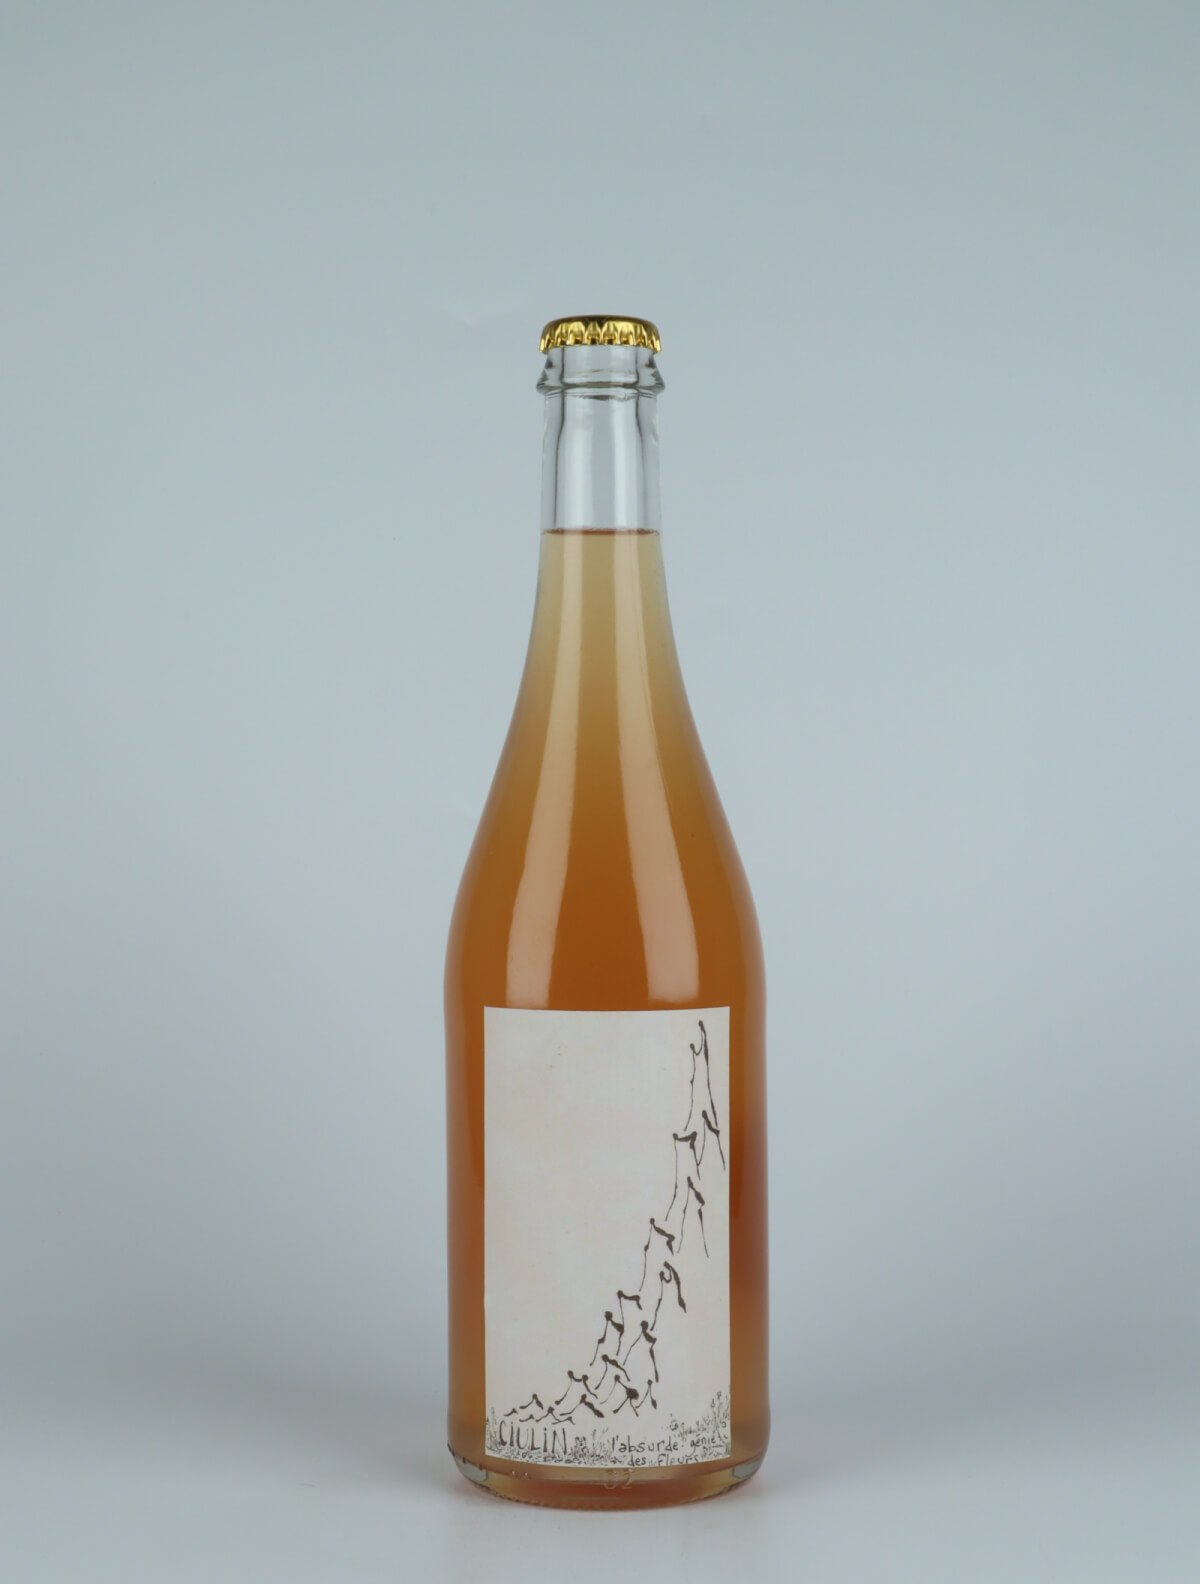 A bottle 2021 Ciulin White wine from Absurde Génie des Fleurs, Languedoc in France